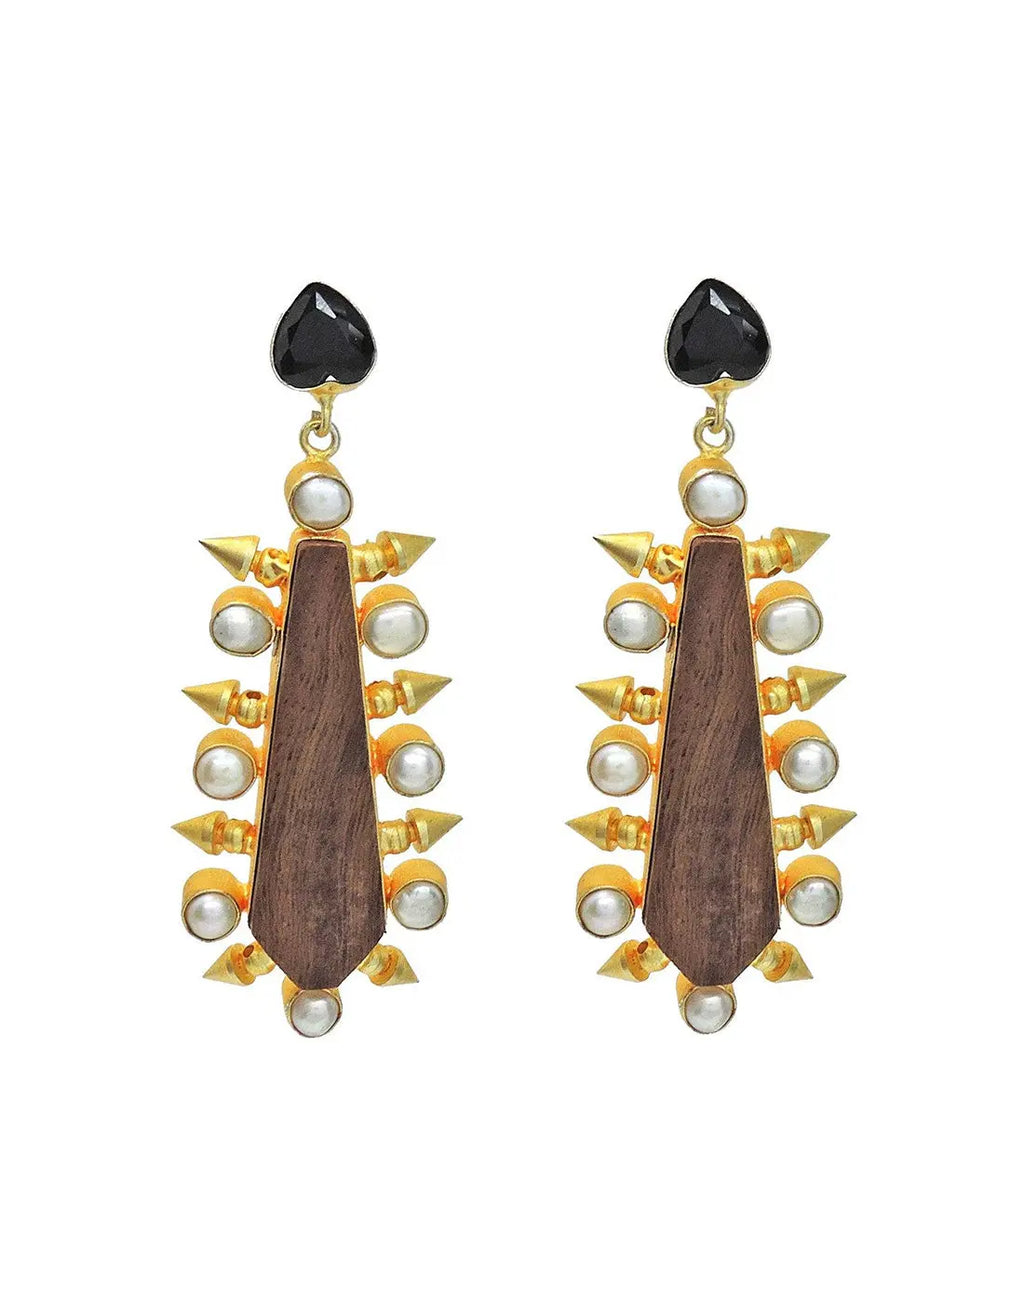 Spade Earrings- Handcrafted Jewellery from Dori